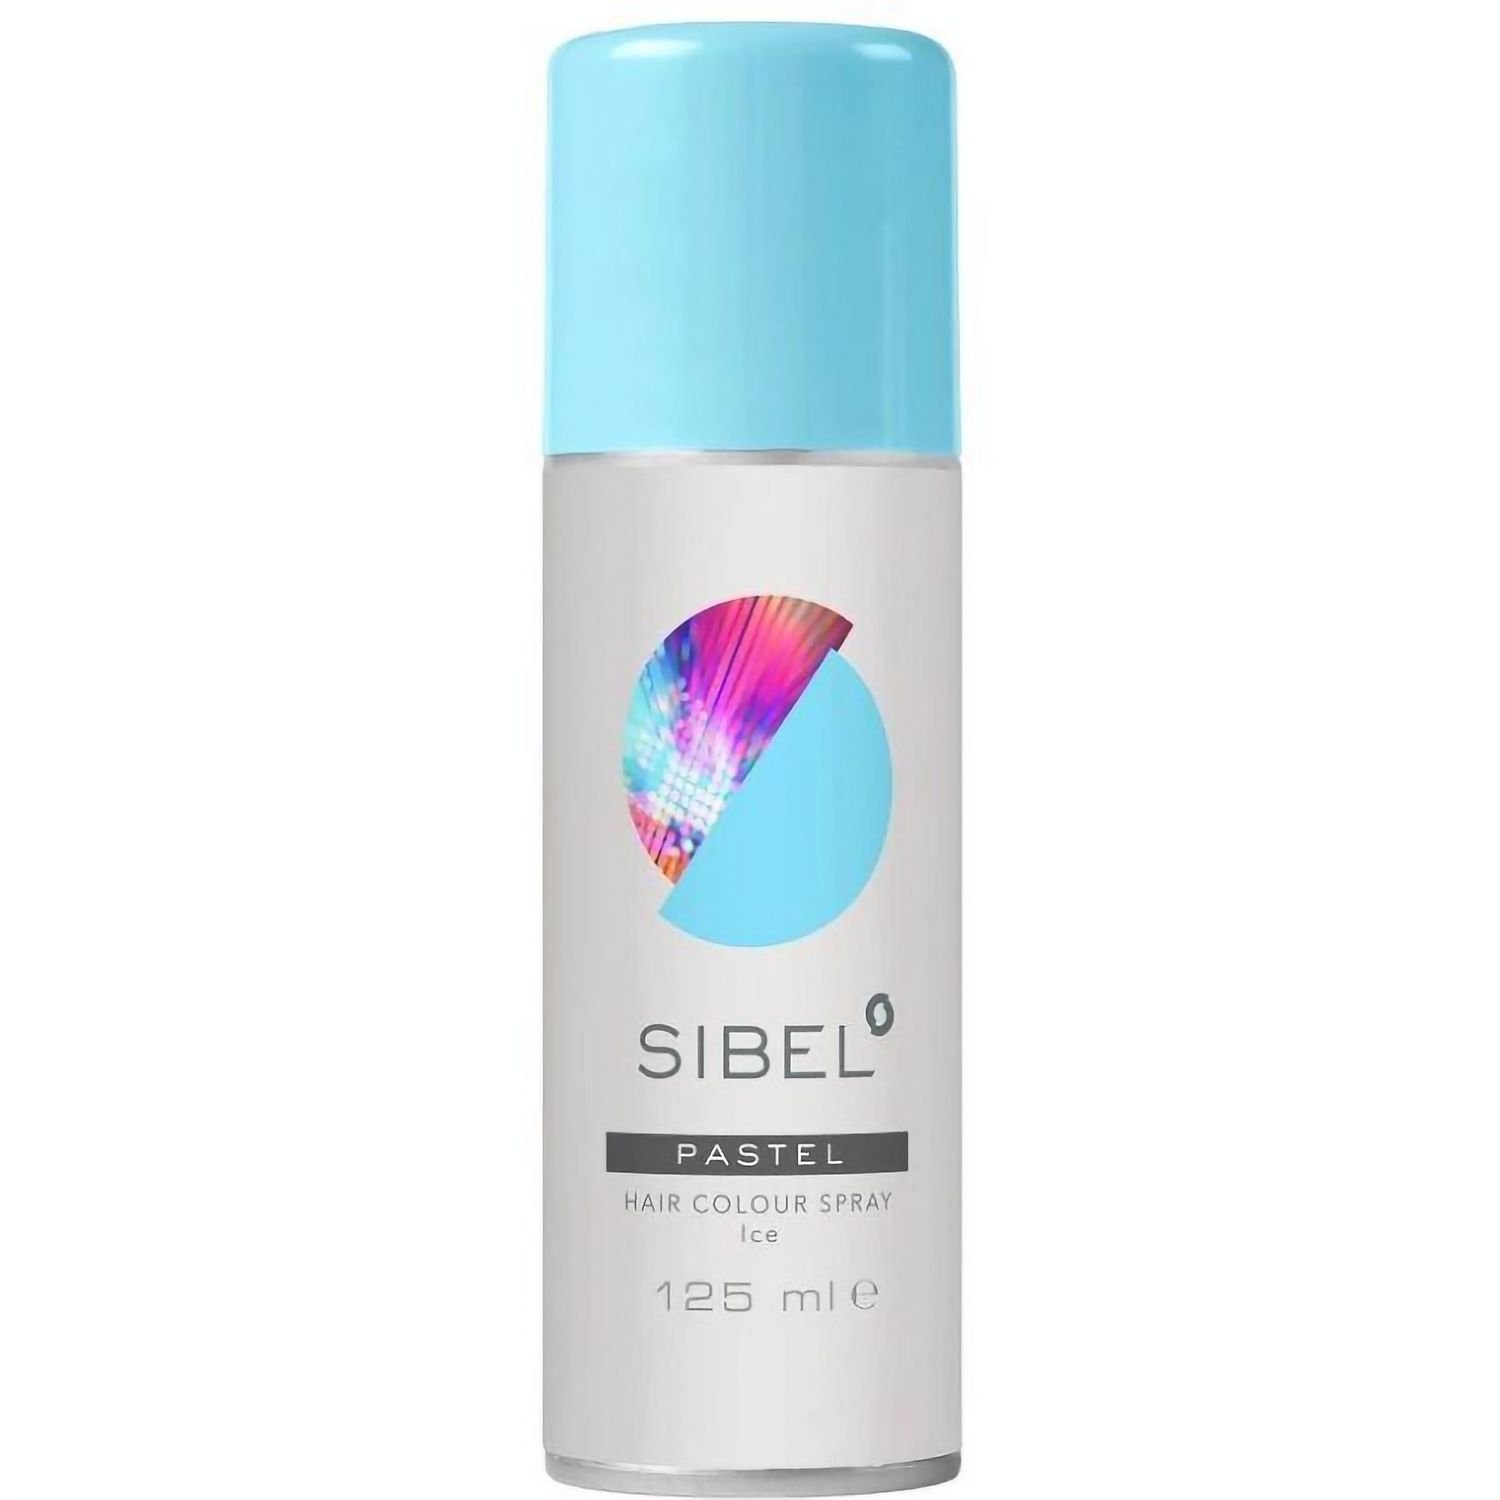 Спрей-фарба для волосся Sibel Pastel Hair Colour Spray Ice, пастельний айс, 125 мл - фото 1